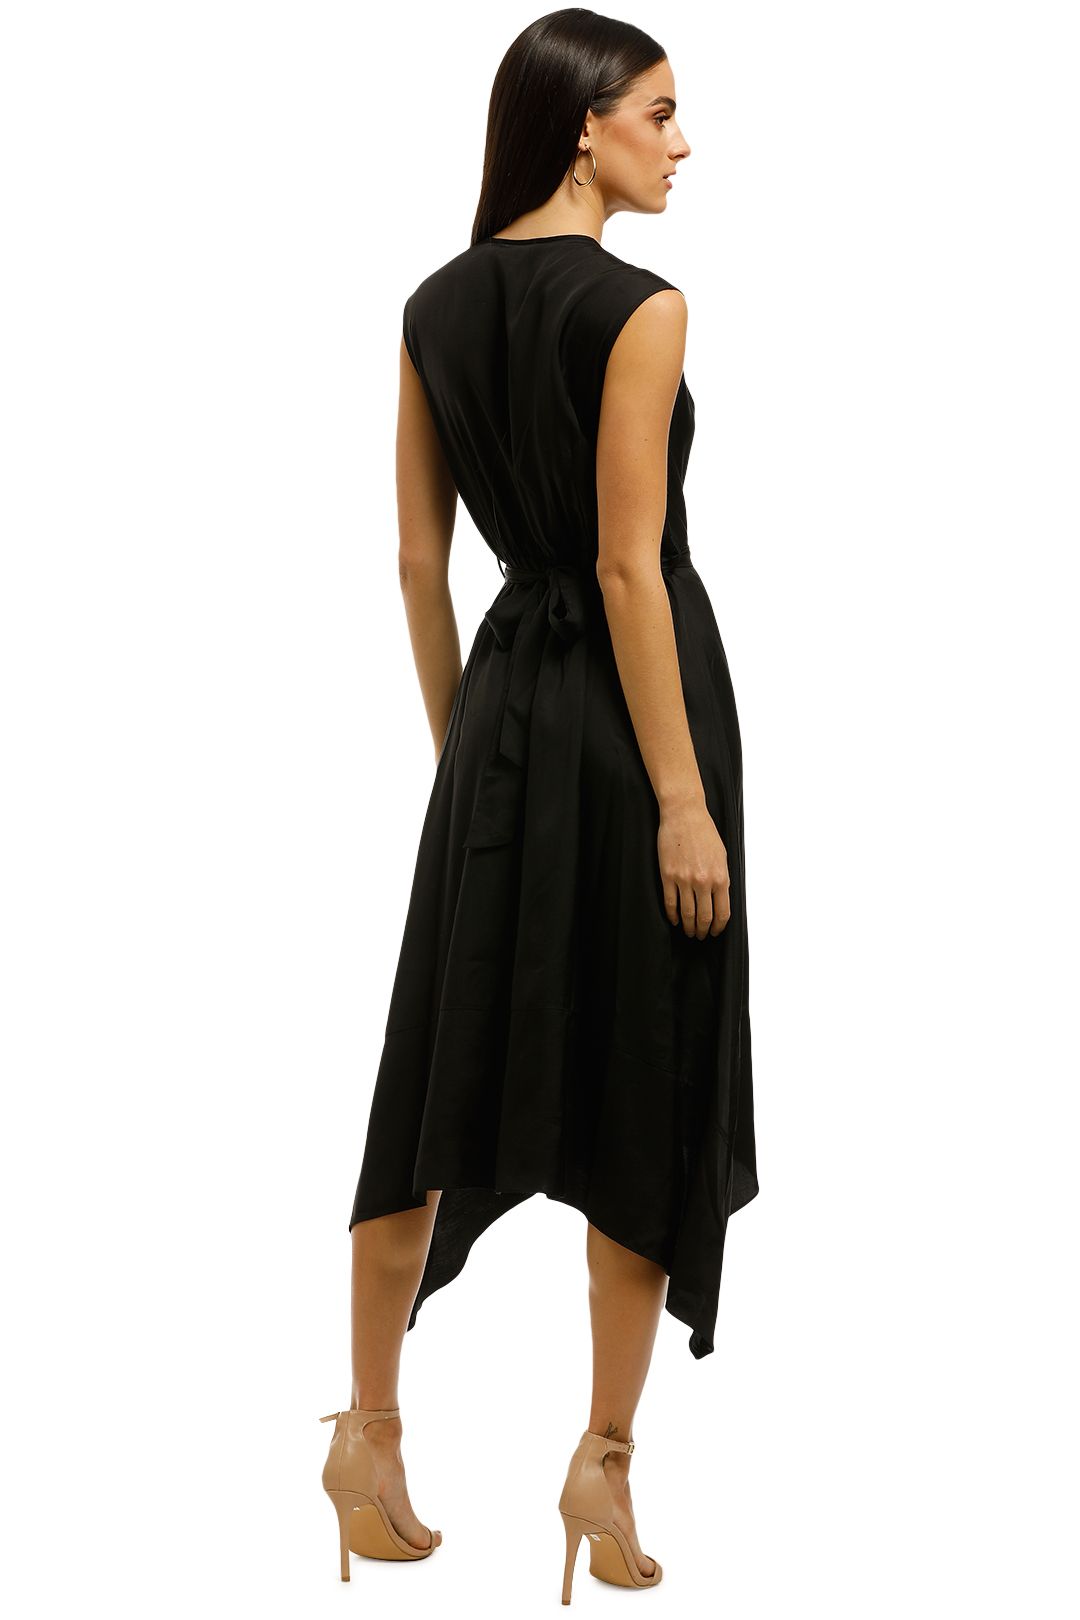 FWRD-The-Label-Leah-Dress-Black-Back